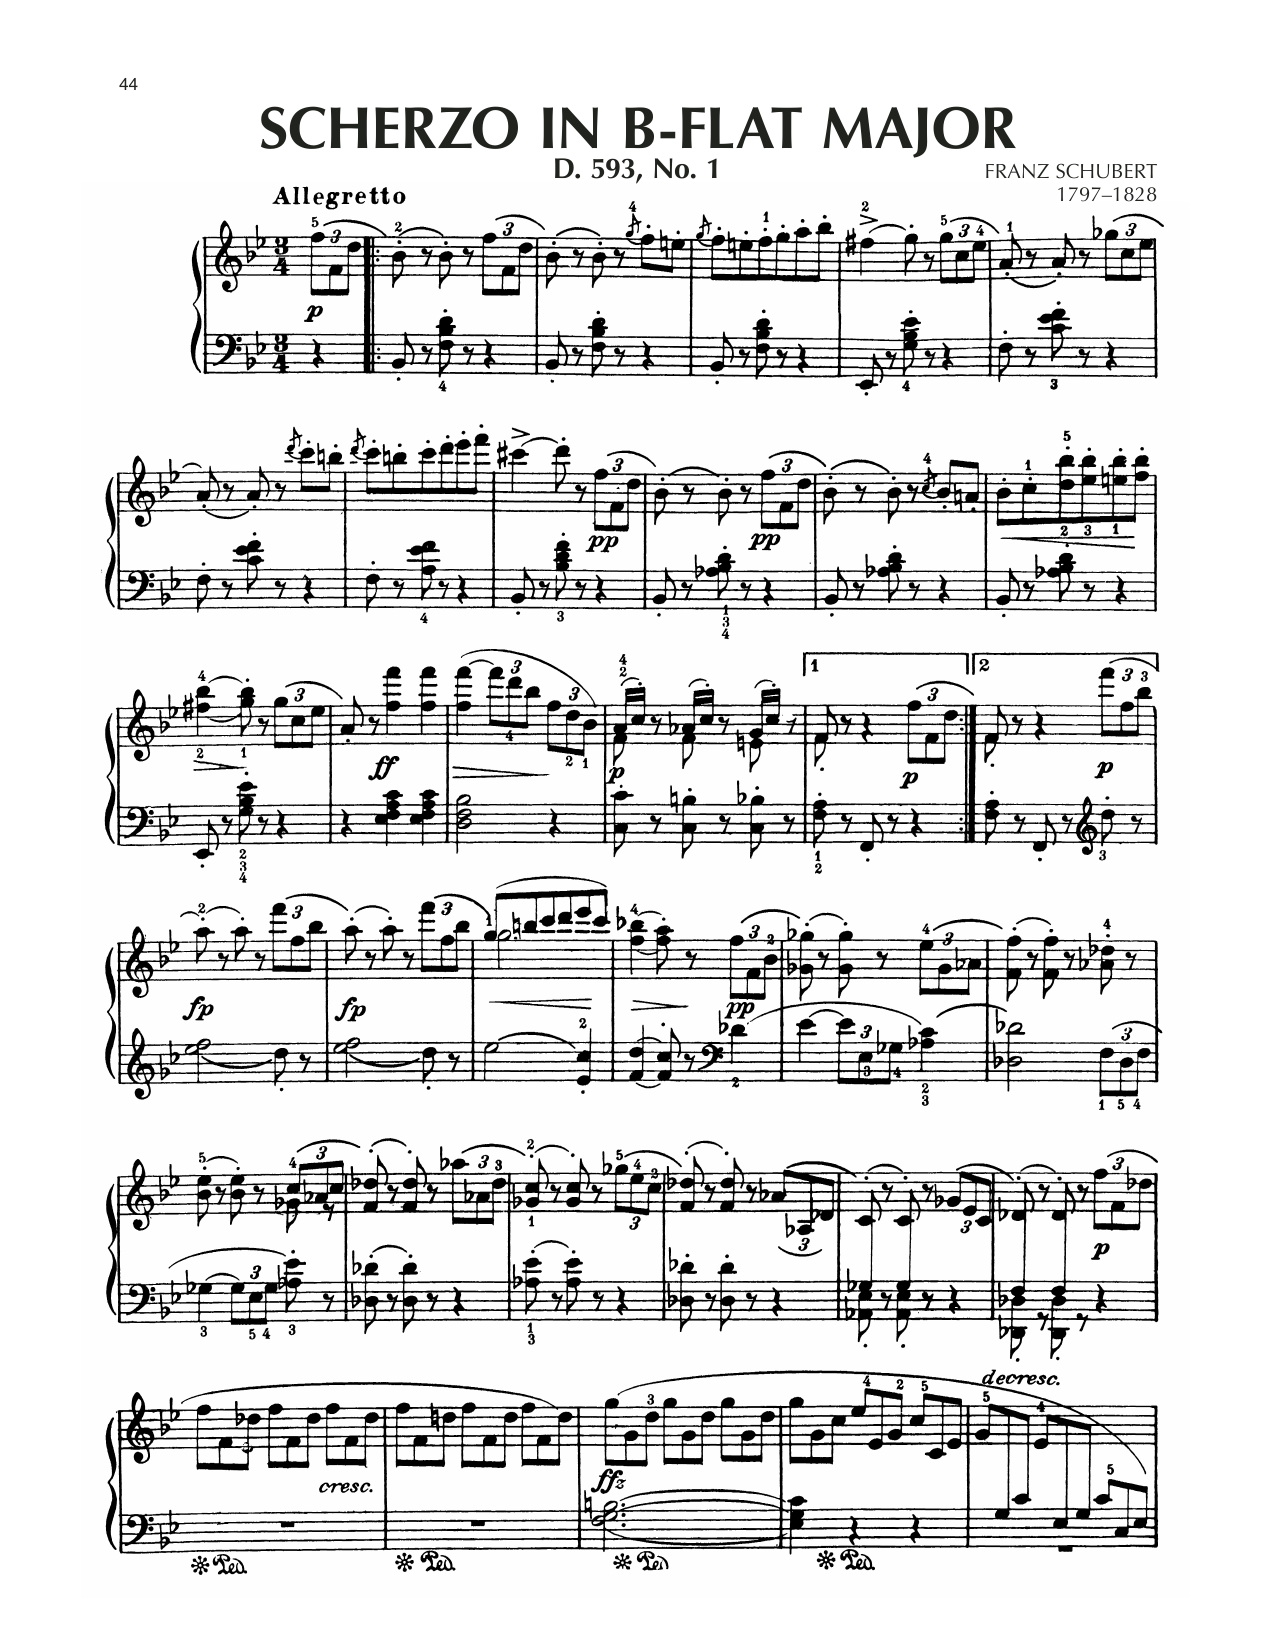 Franz Schubert Scherzo In B-Flat Major, D. 593, No. 1 sheet music notes and chords arranged for Piano Solo